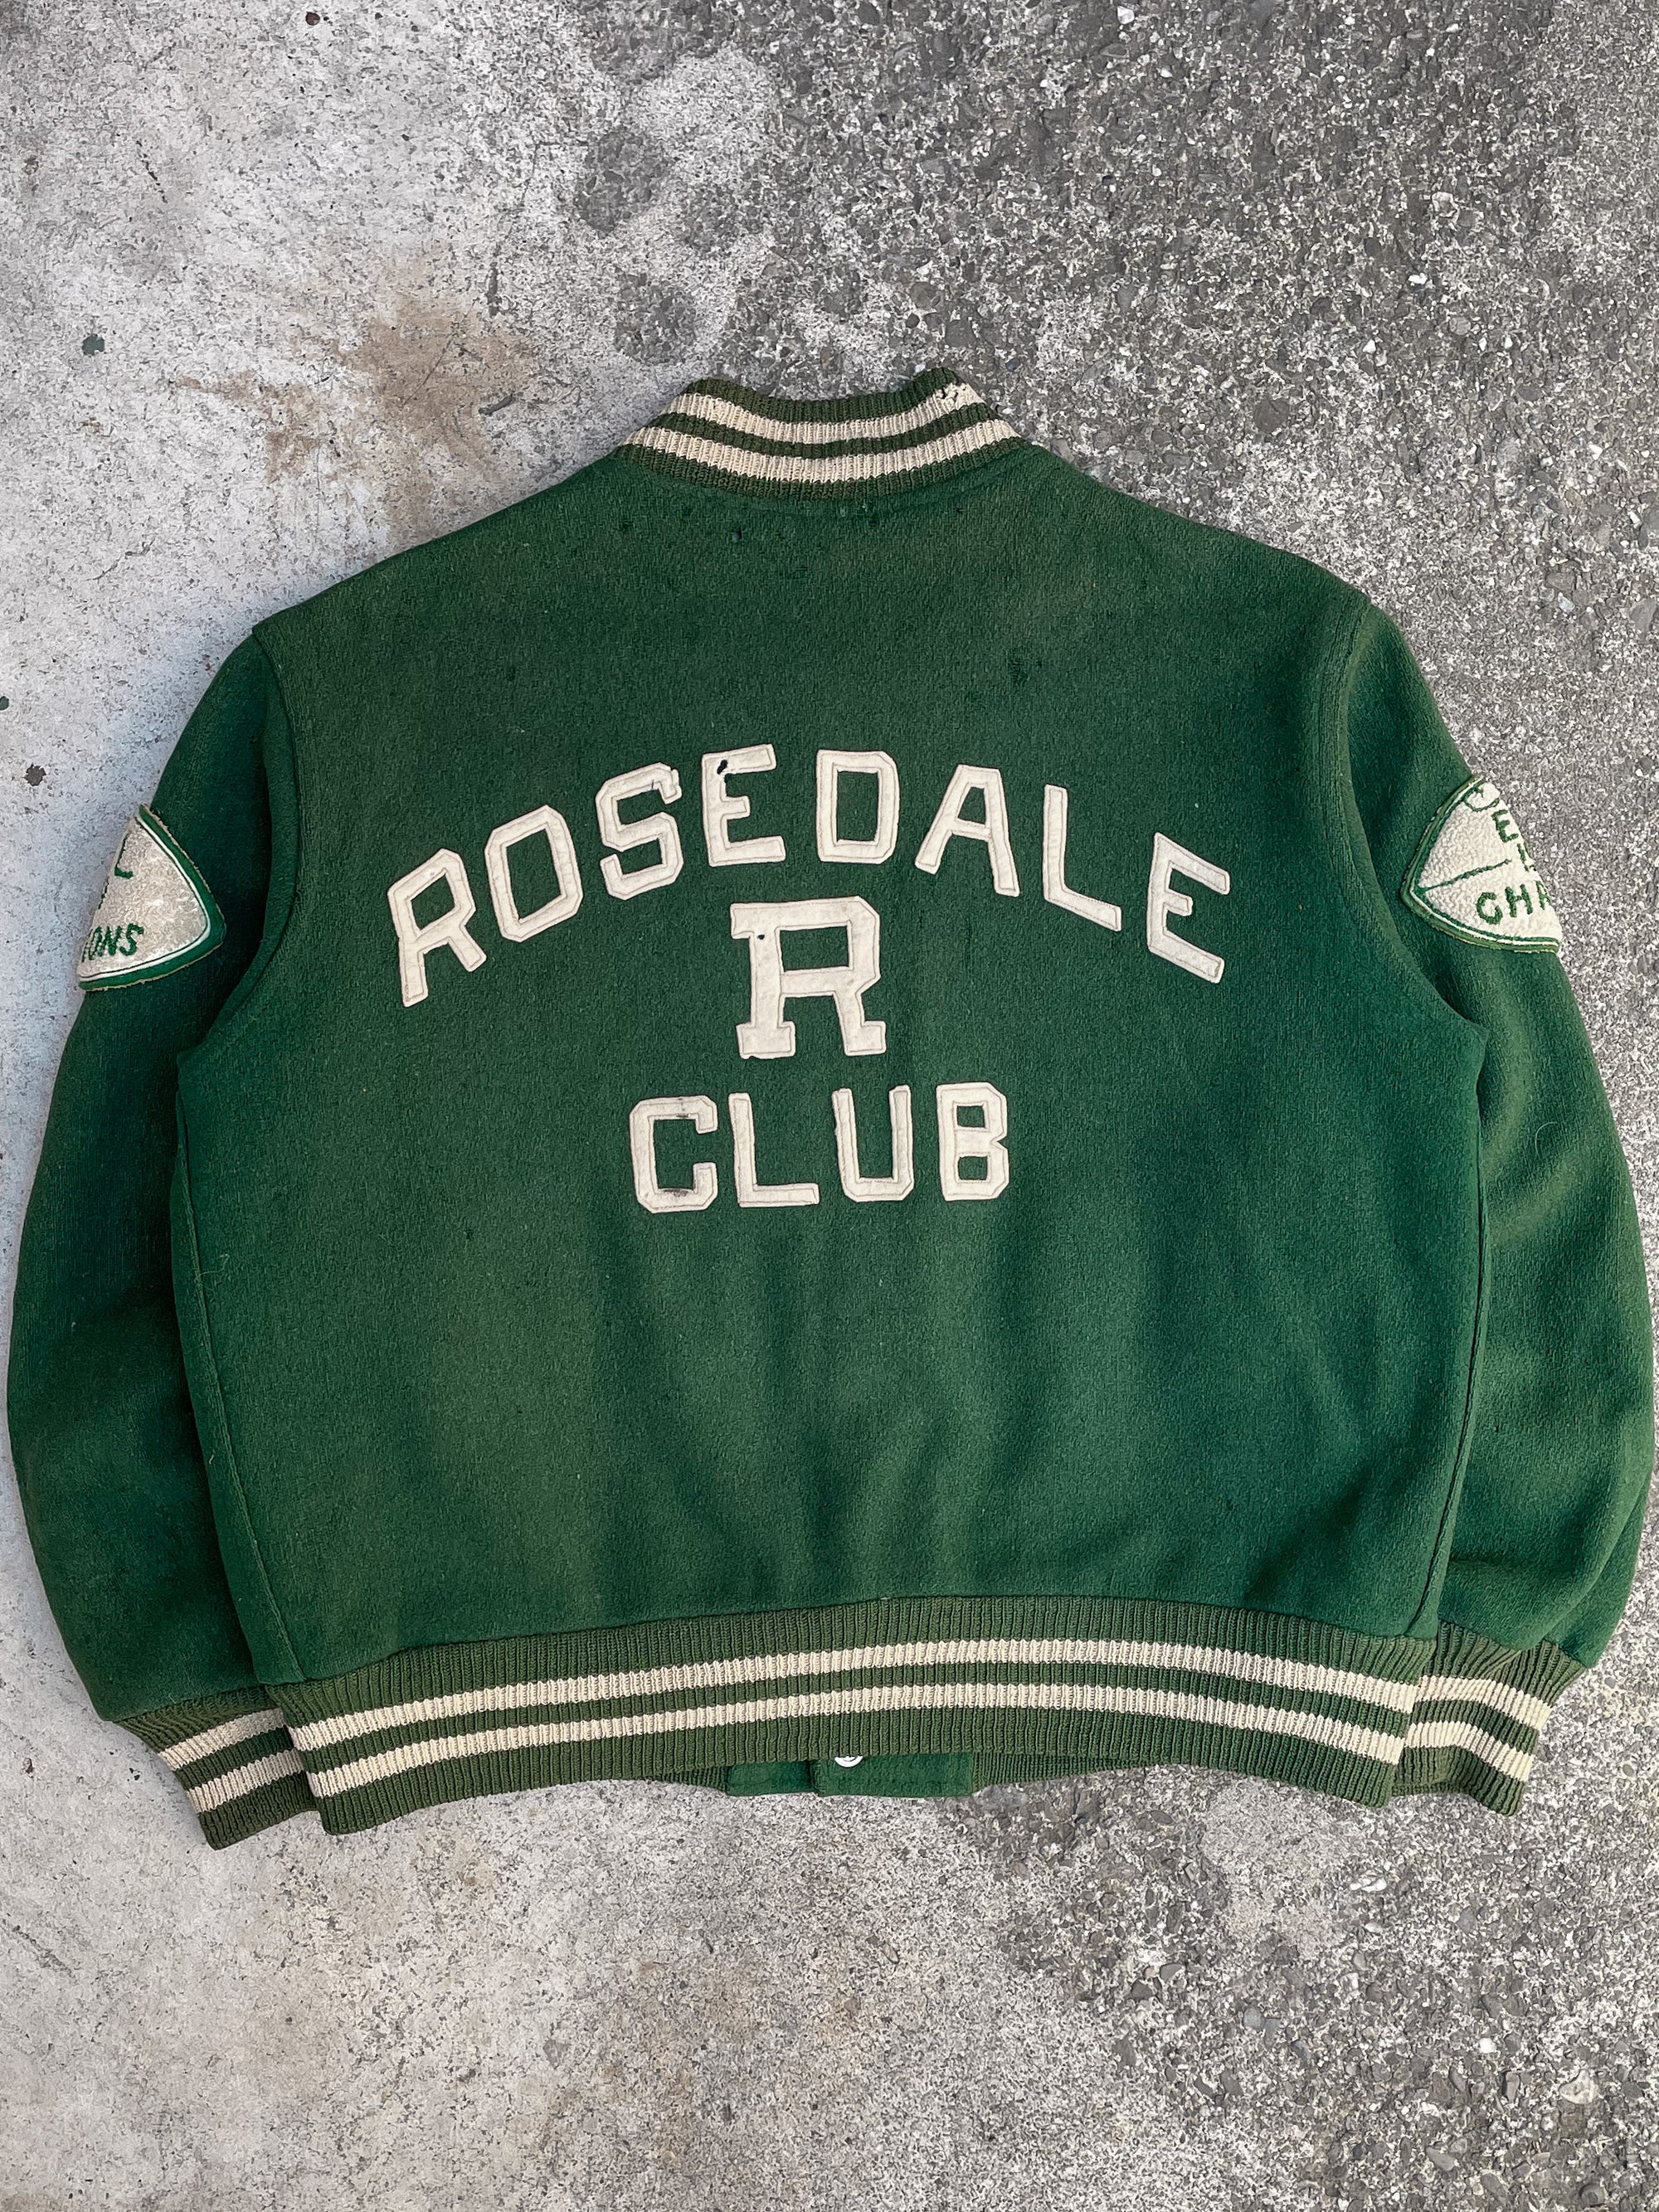 1950s “Rosedale Club” Faded Green Wool Varsity Jacket